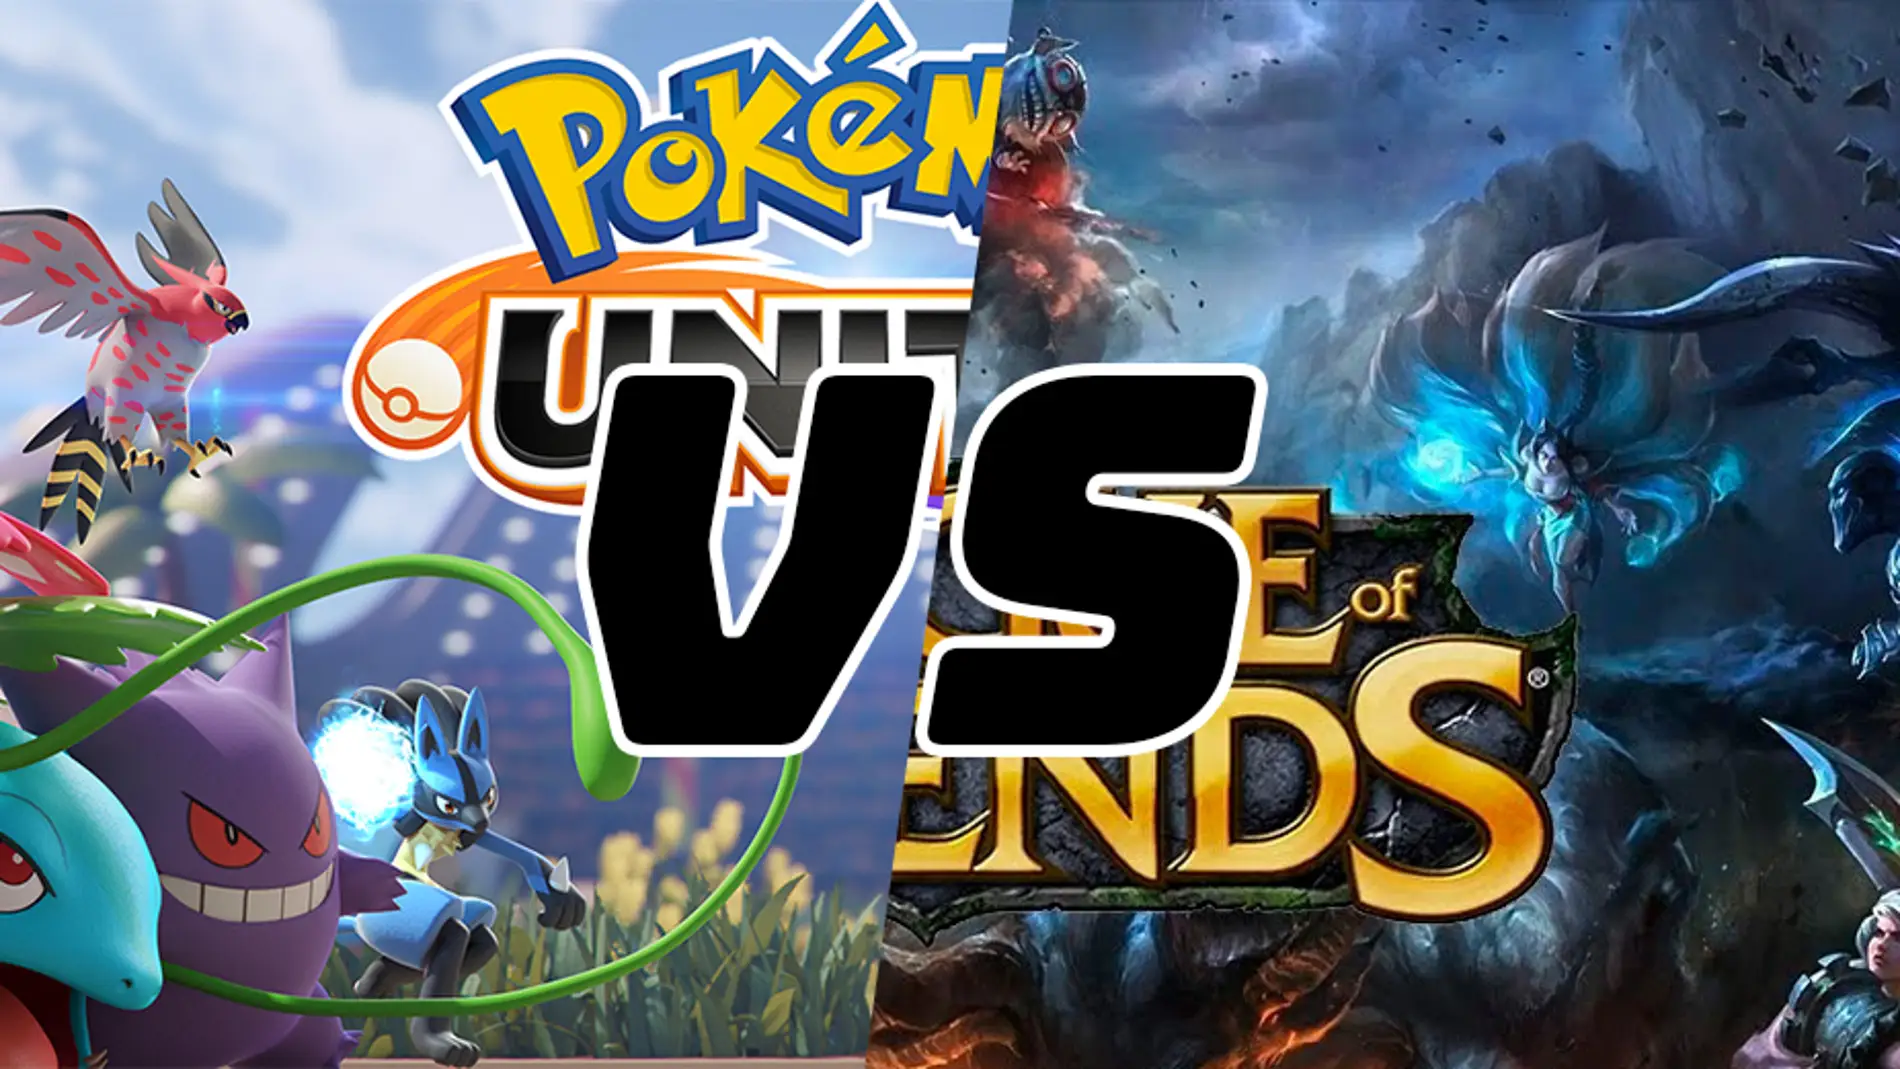 Pokémon Unite VS LoL